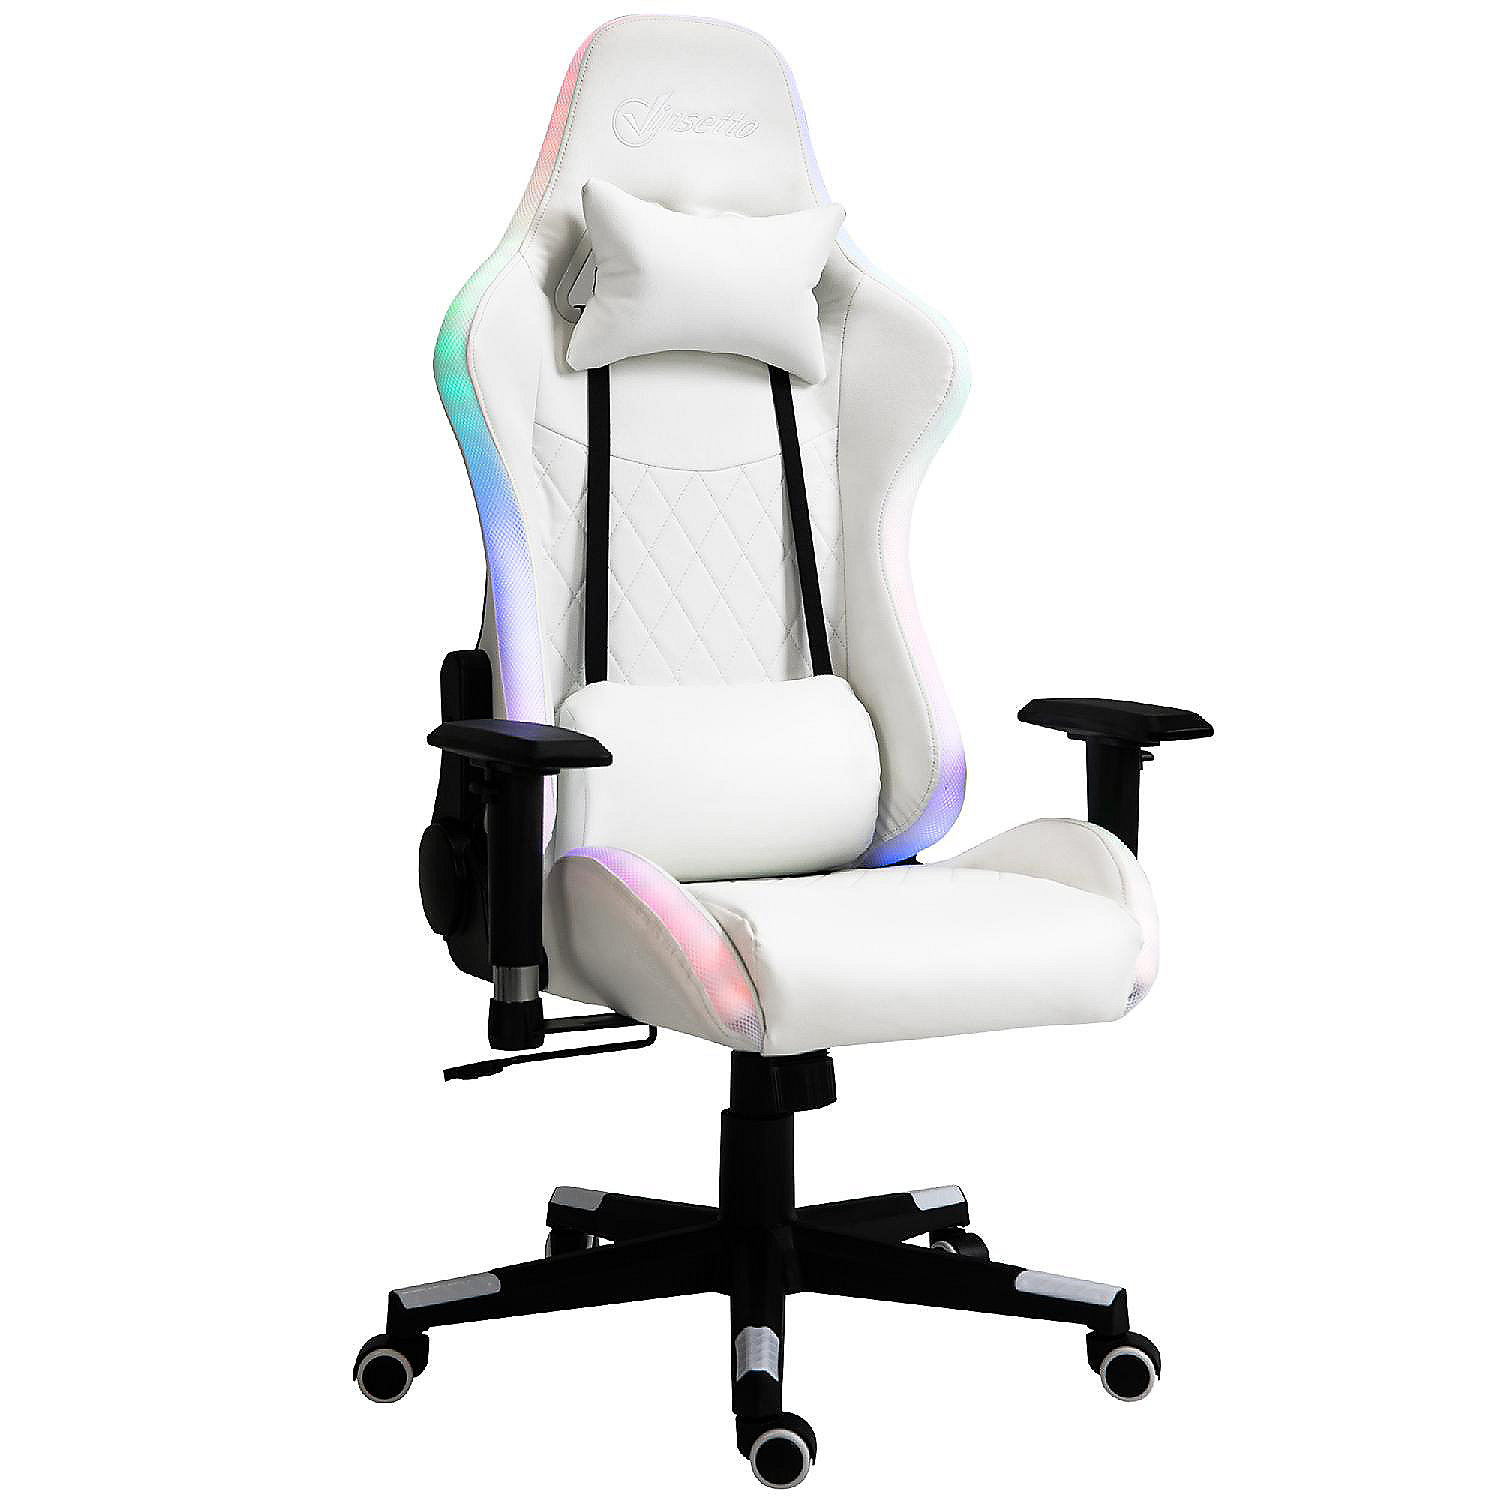 Racing RGB LED Light Gaming Chair Ergonomic Swivel Office Computer Seat Recliner 